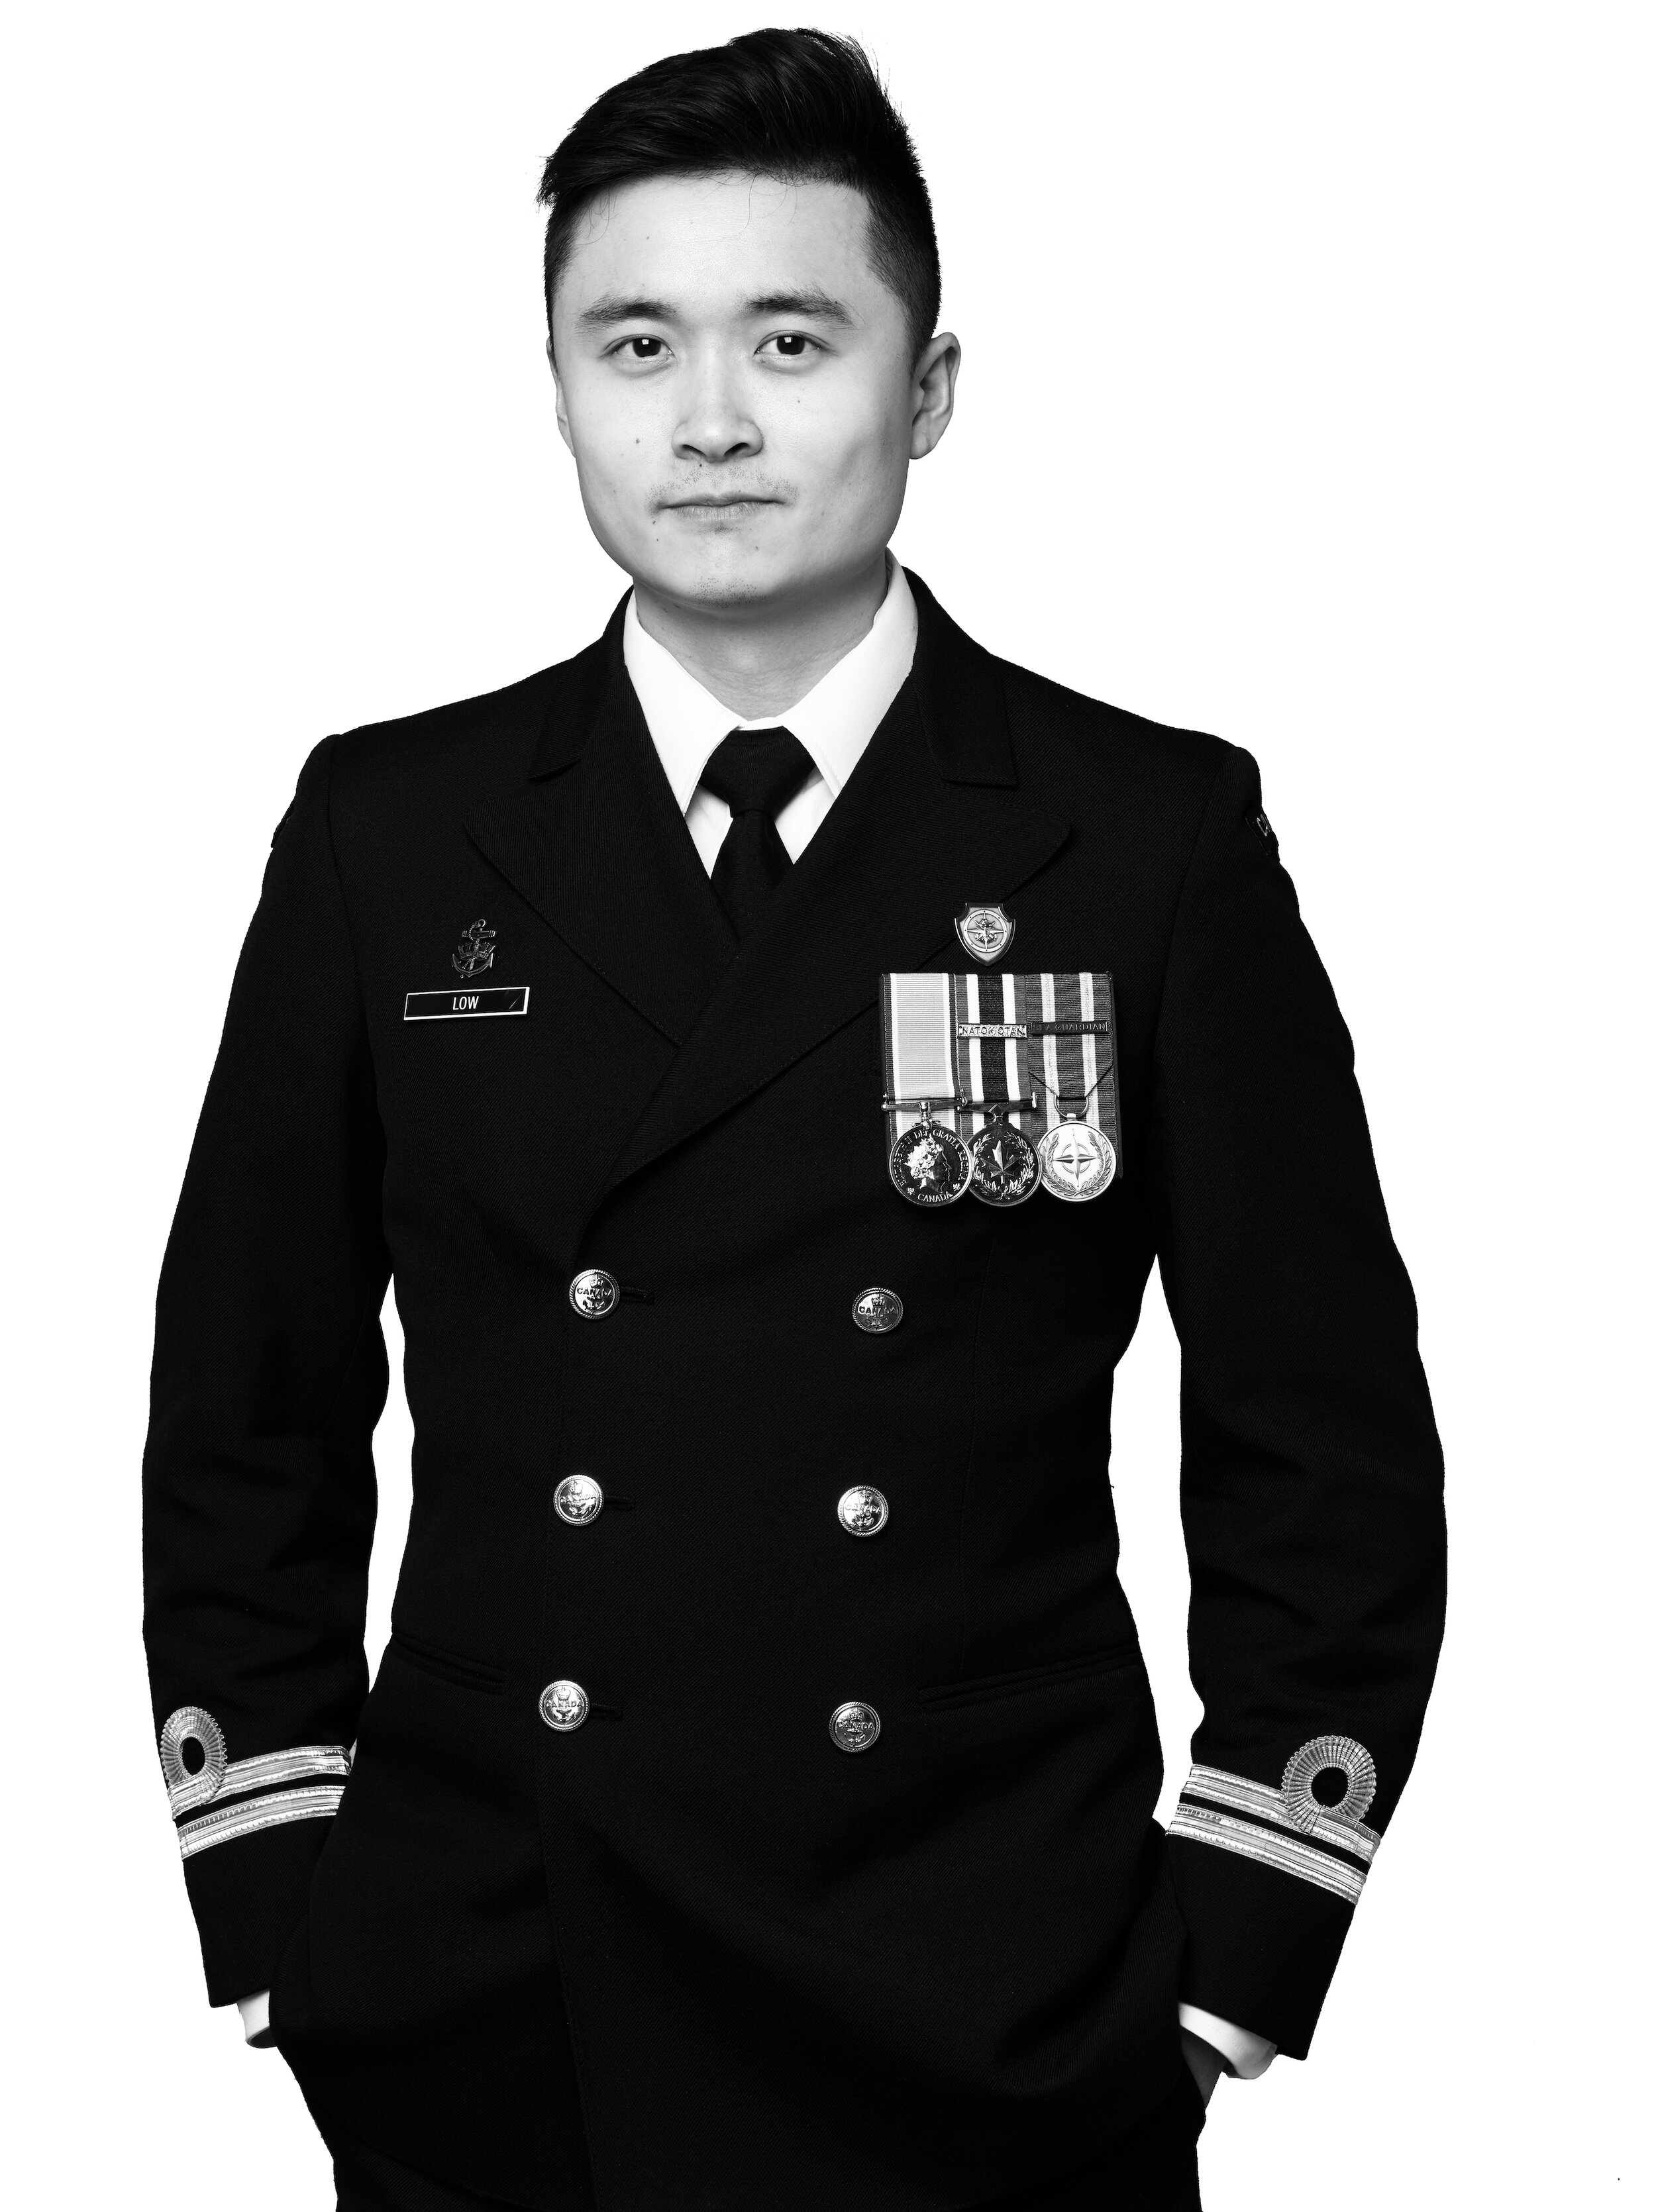 Lieutenant Geoffrey Alex Low